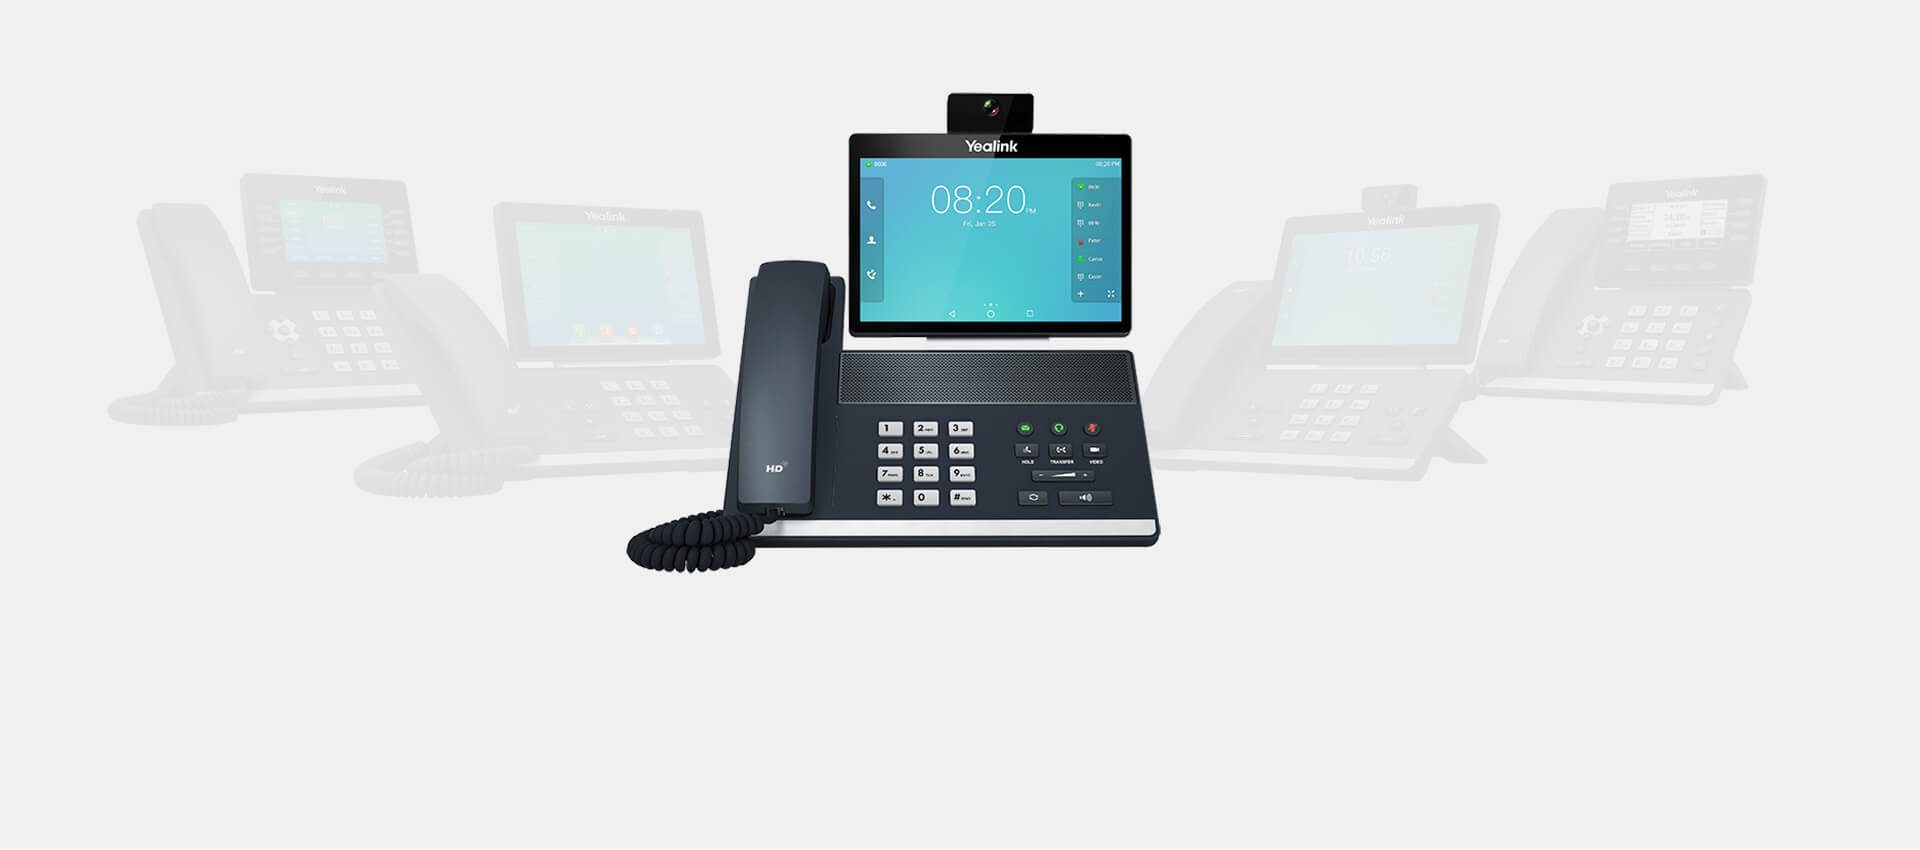 Yealink VP59 - Flagship Smart Video Phone - Voice Communication 